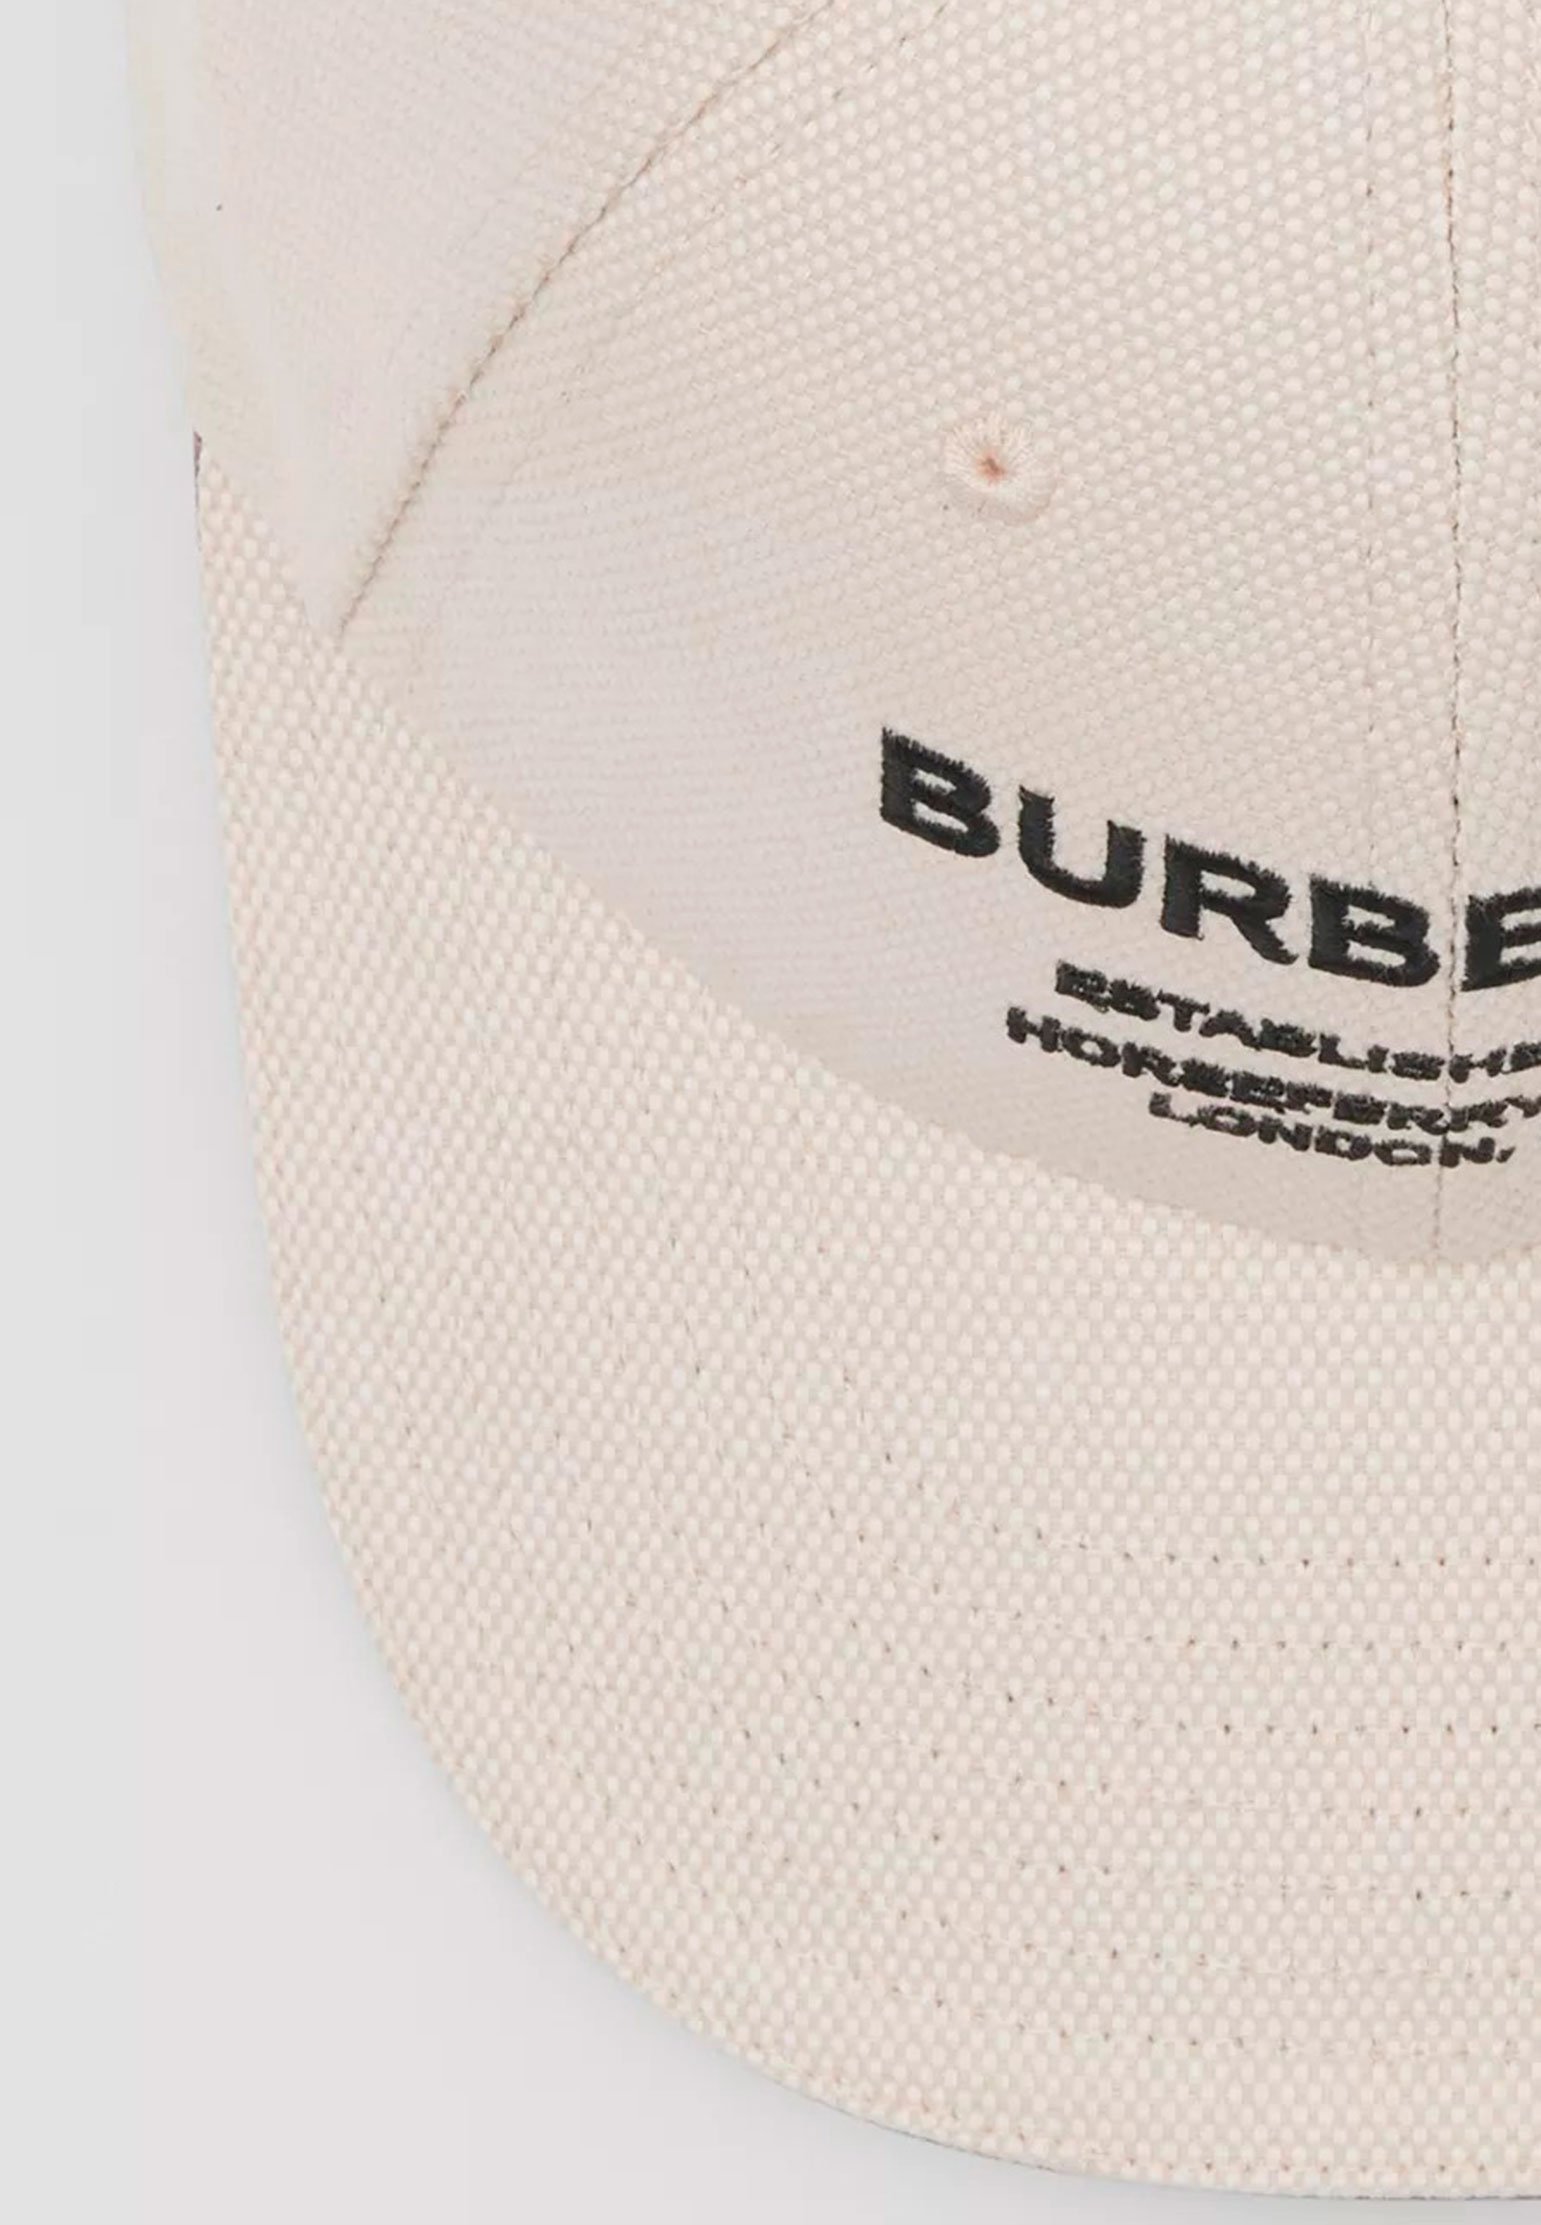 Baseball cap BURBERRY Color: beige (Code: 923) in online store Allure